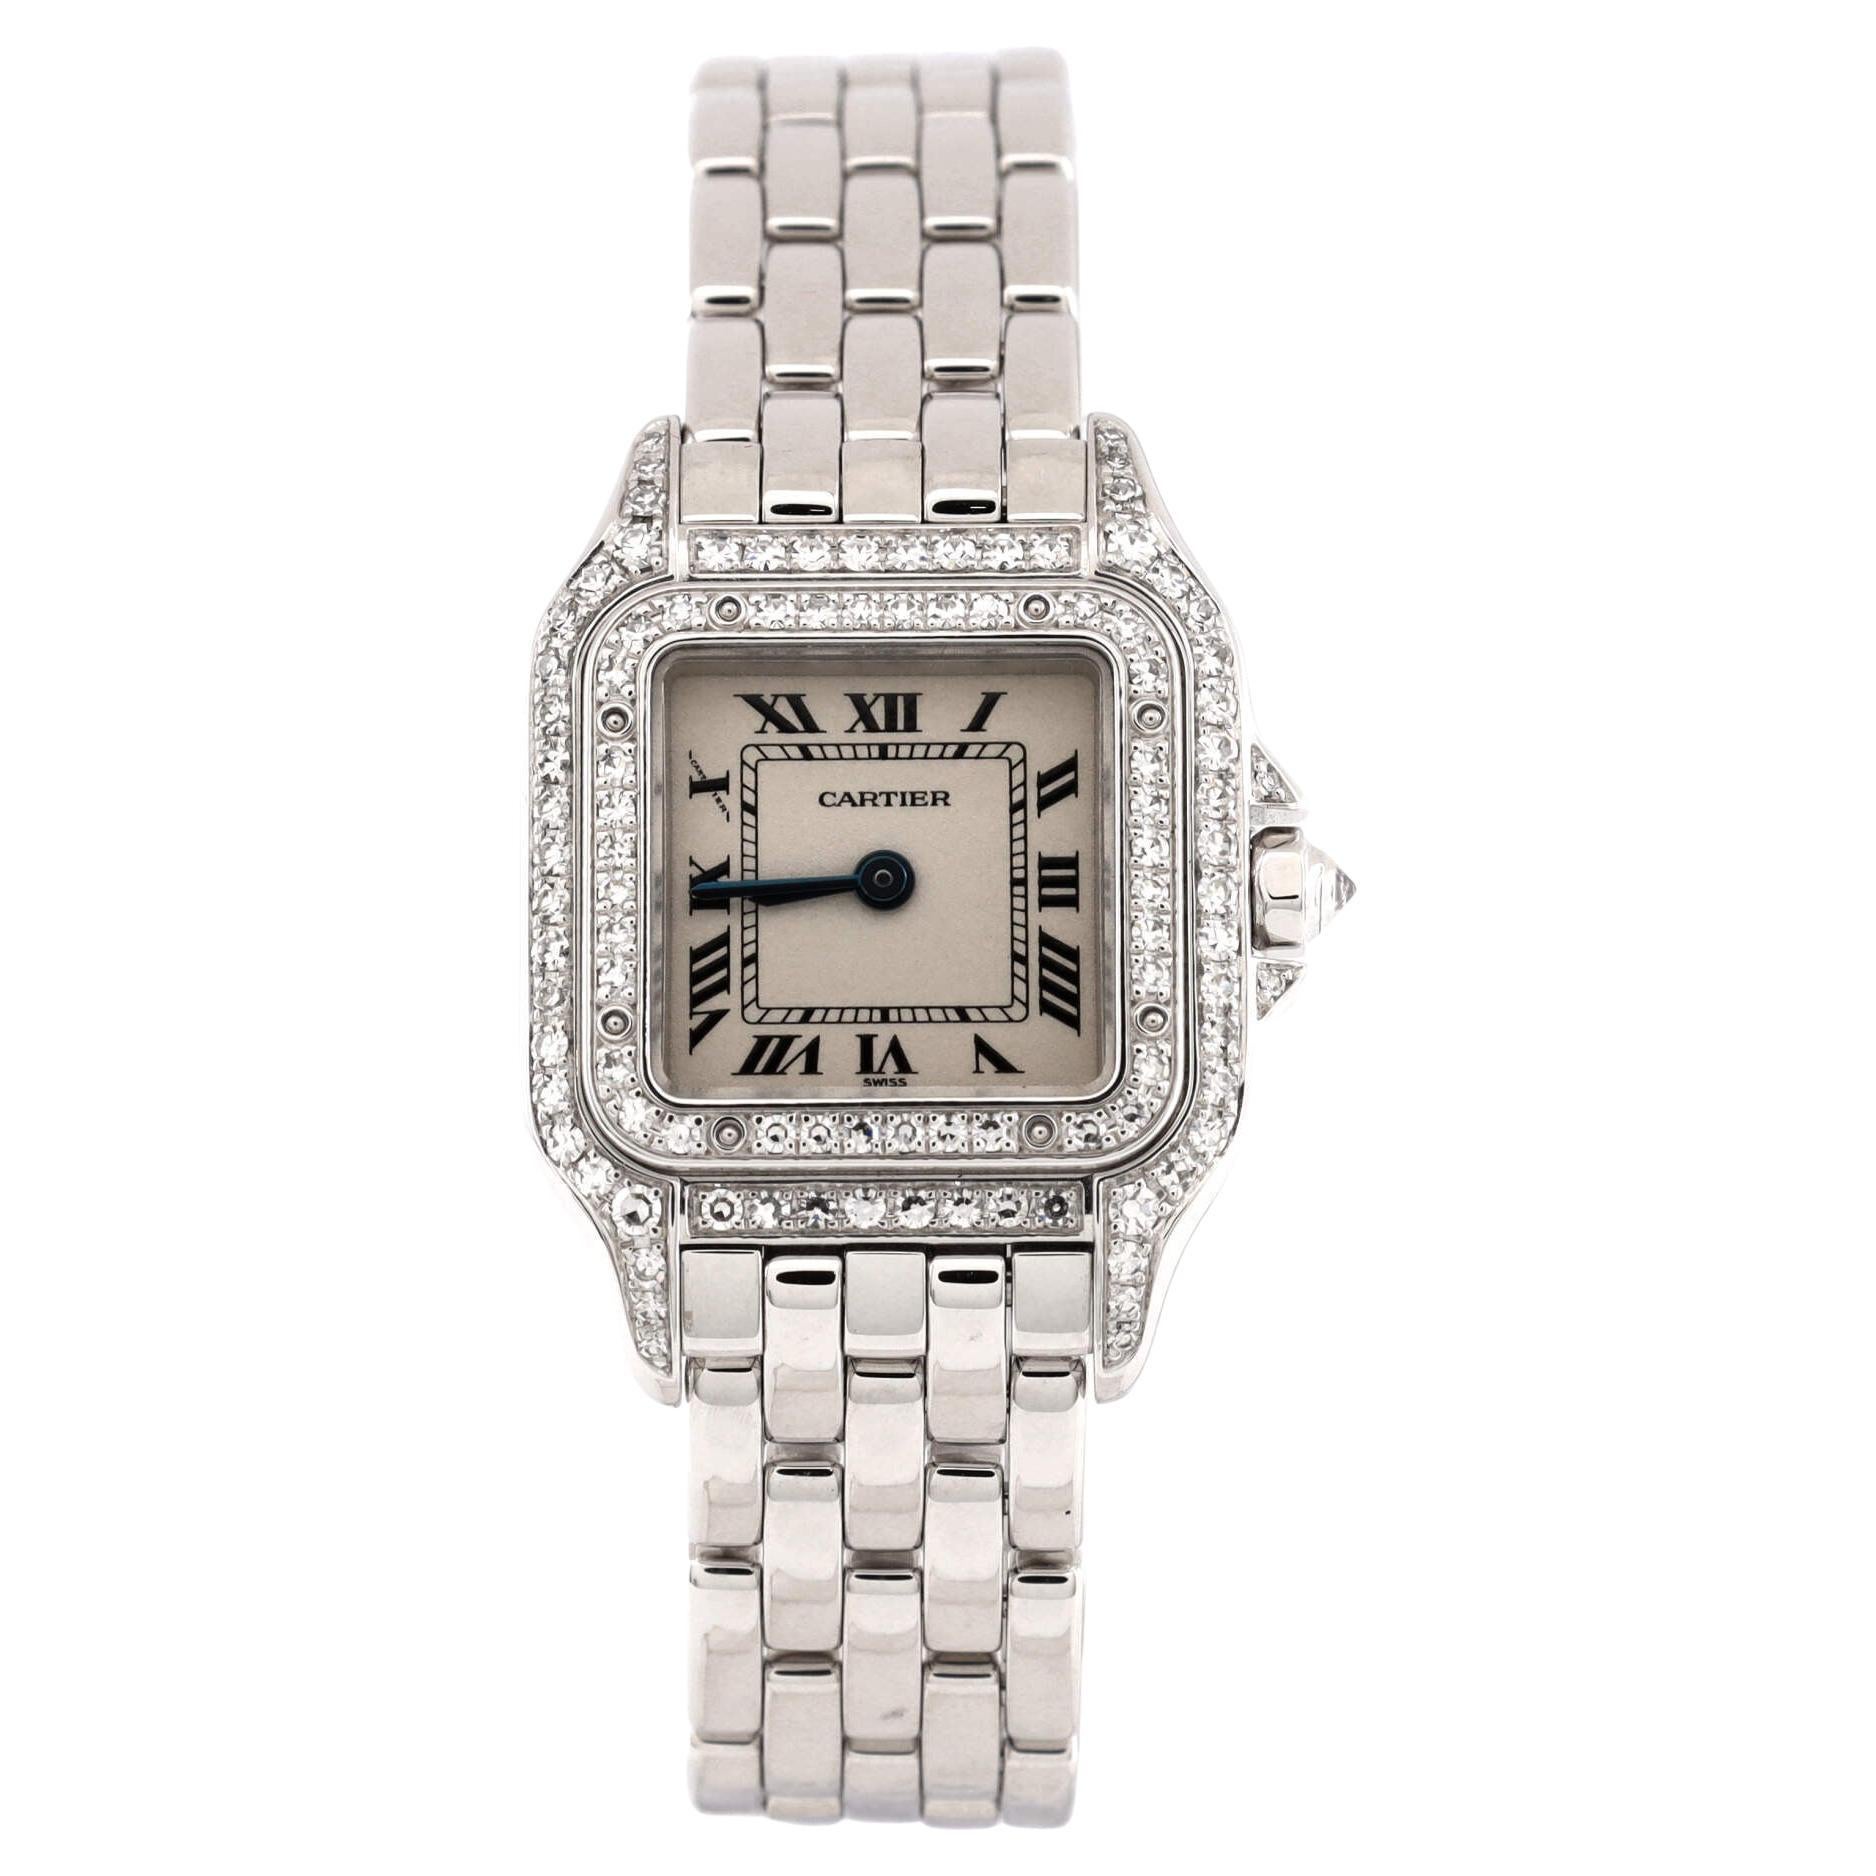 Cartier Panthere De Cartier Quartz Watch White Gold with Diamond Bezel and Lugs